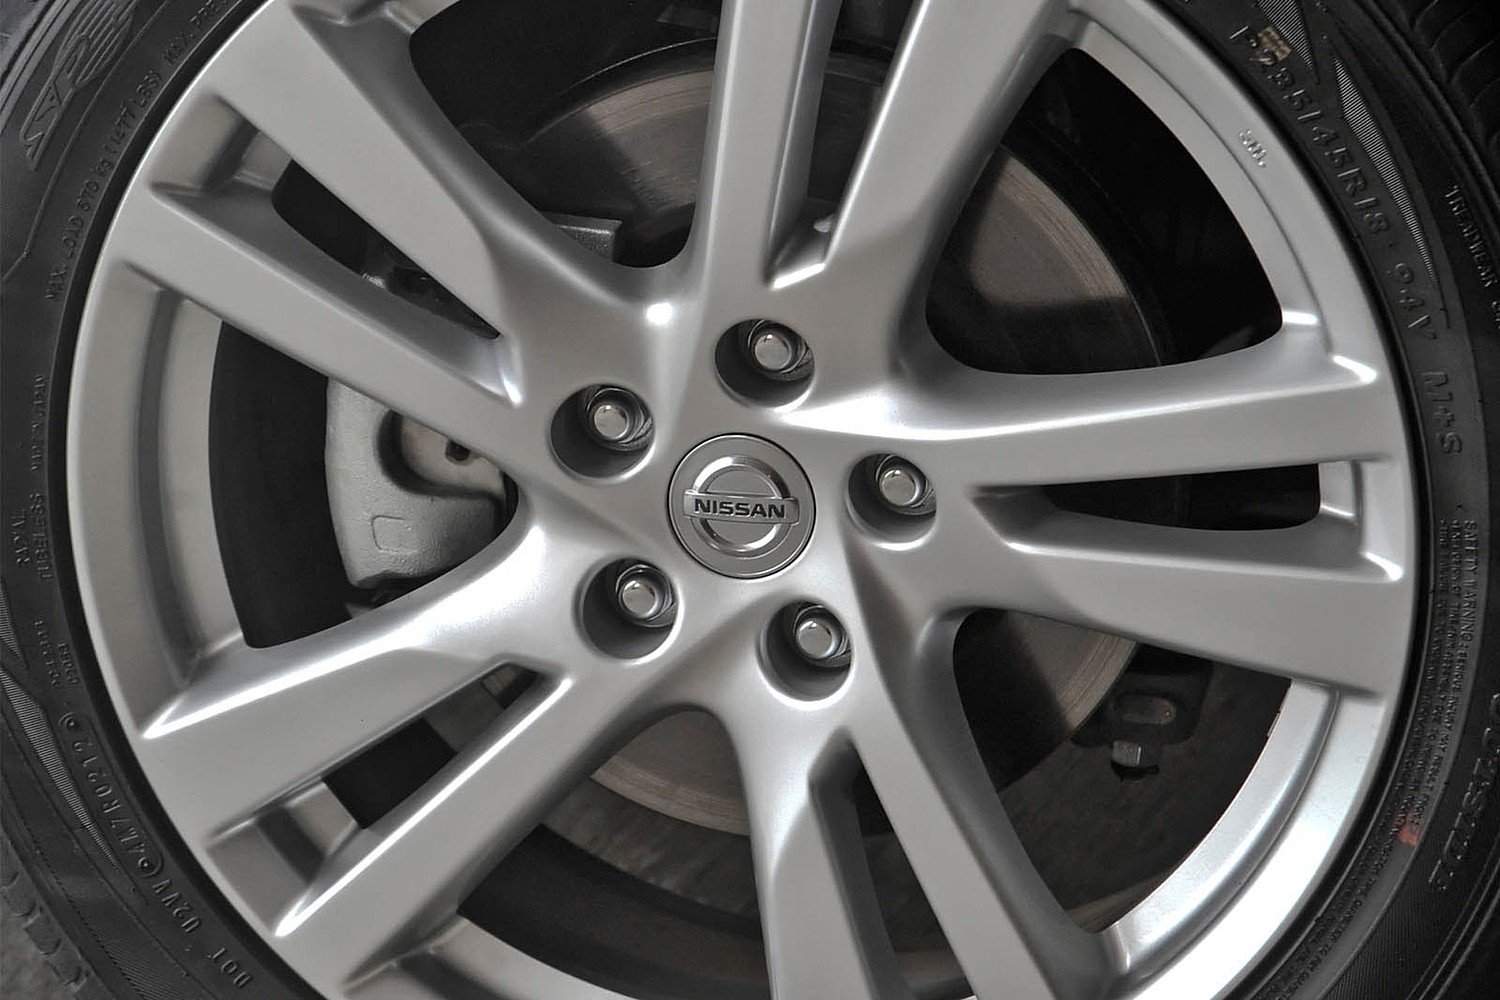 Nissan Altima 3.5 SL Sedan Wheel (2013 model year shown)